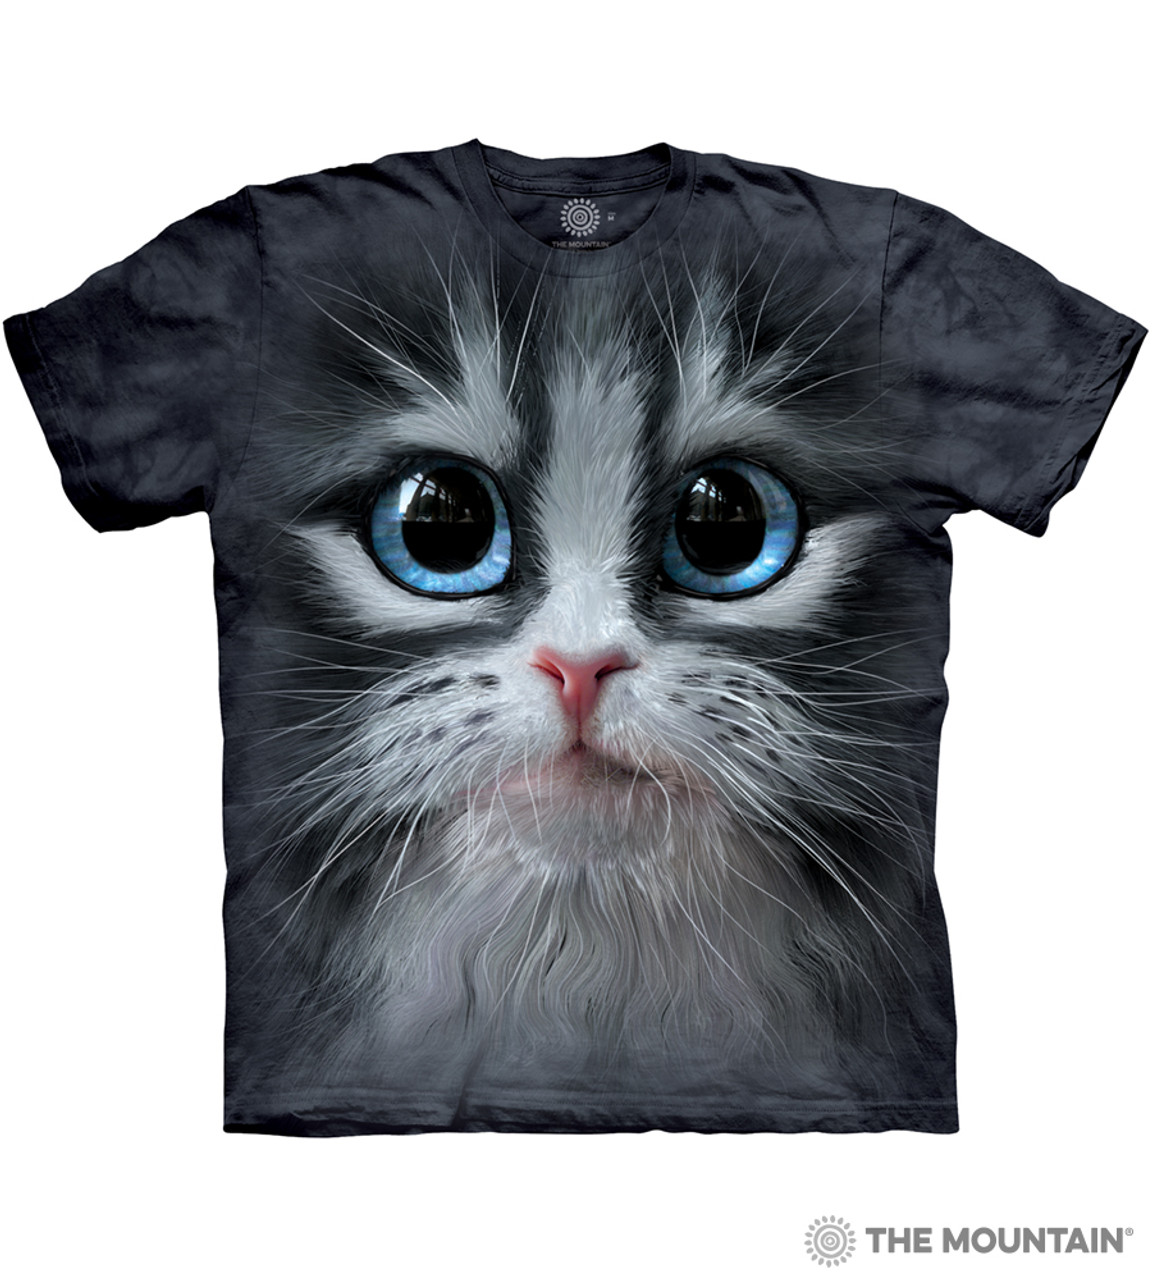 The Mountain Adult Unisex T-Shirt - Cutie Pie Kitten Face